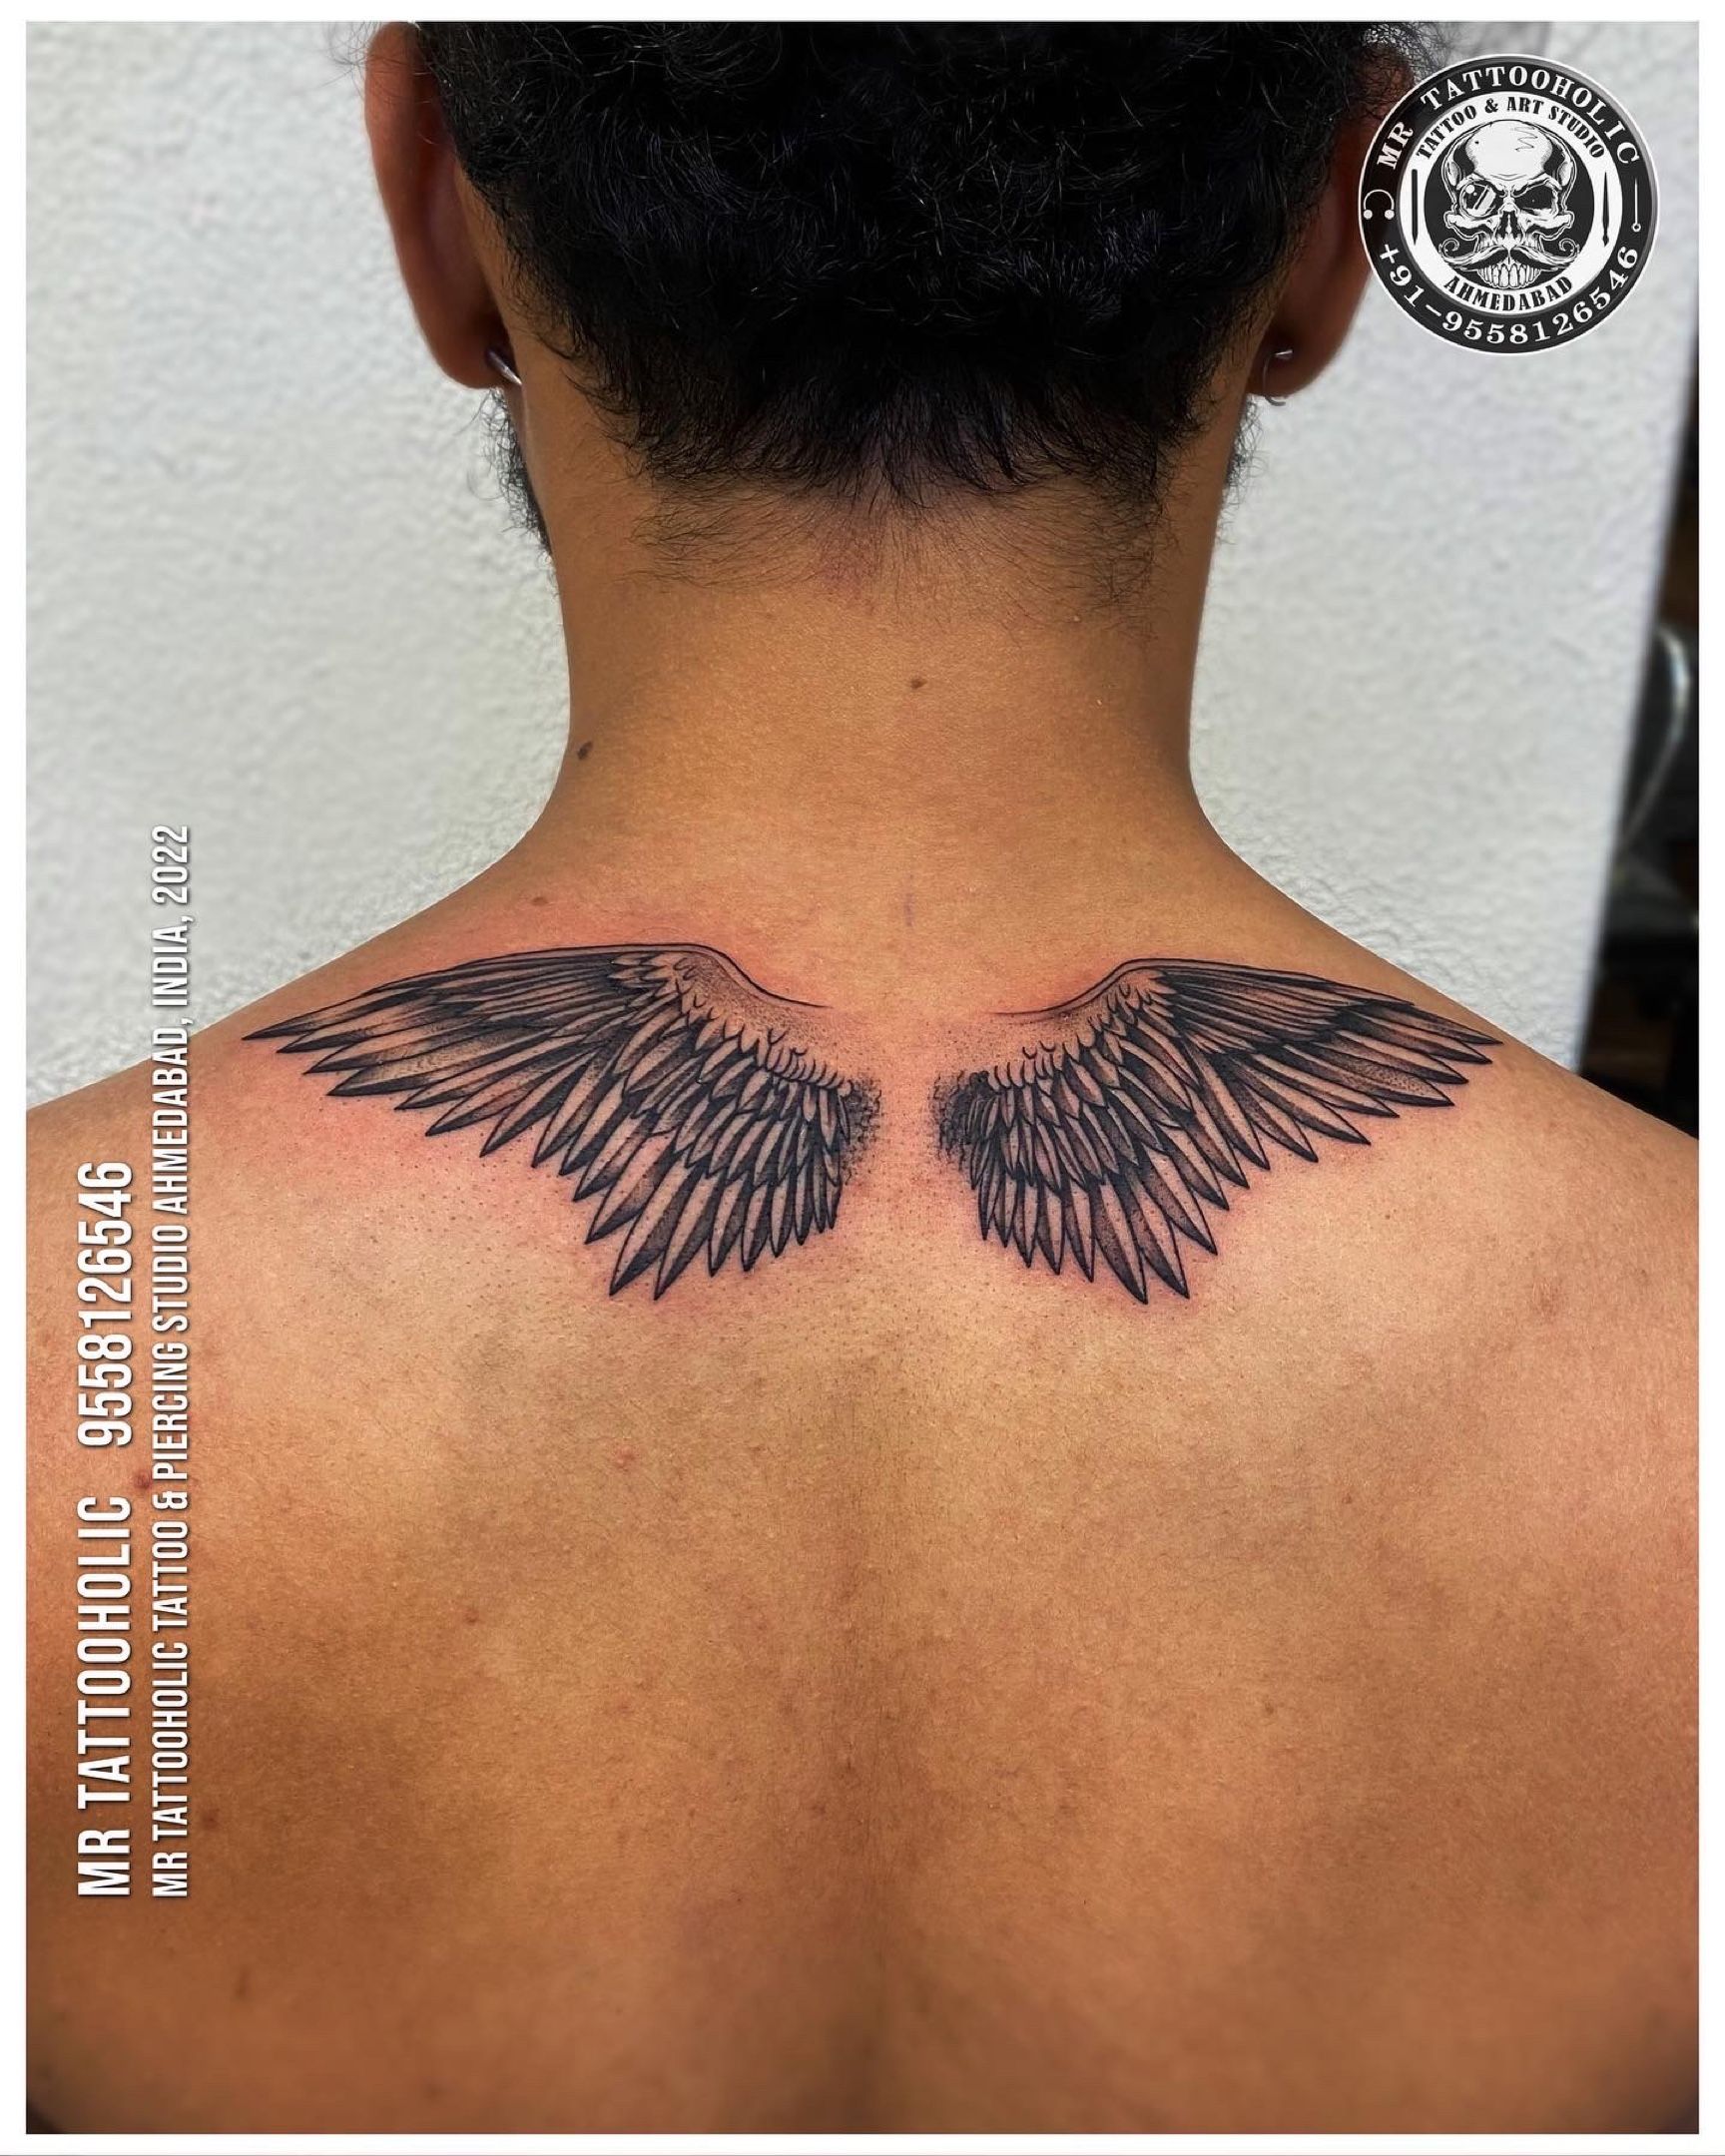 grey ink devil and angel tattoos designs on shoulder  a photo on Flickriver